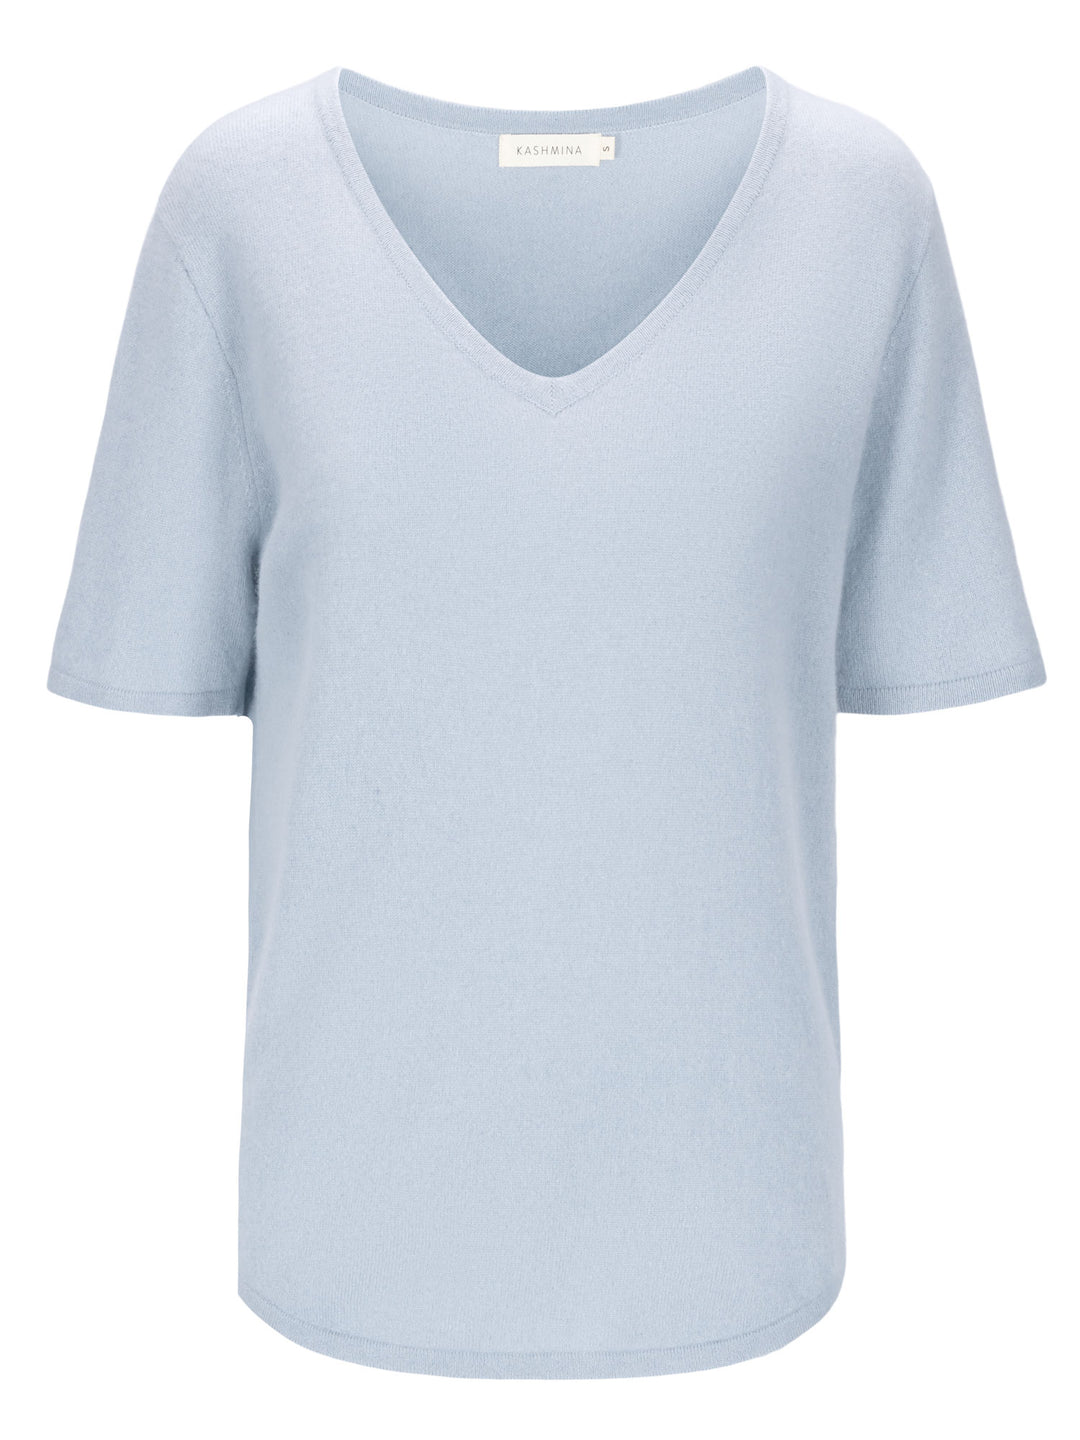 Cashmere T-shirt "Iben" 100% cashmere from Kashmina. Blue horizon